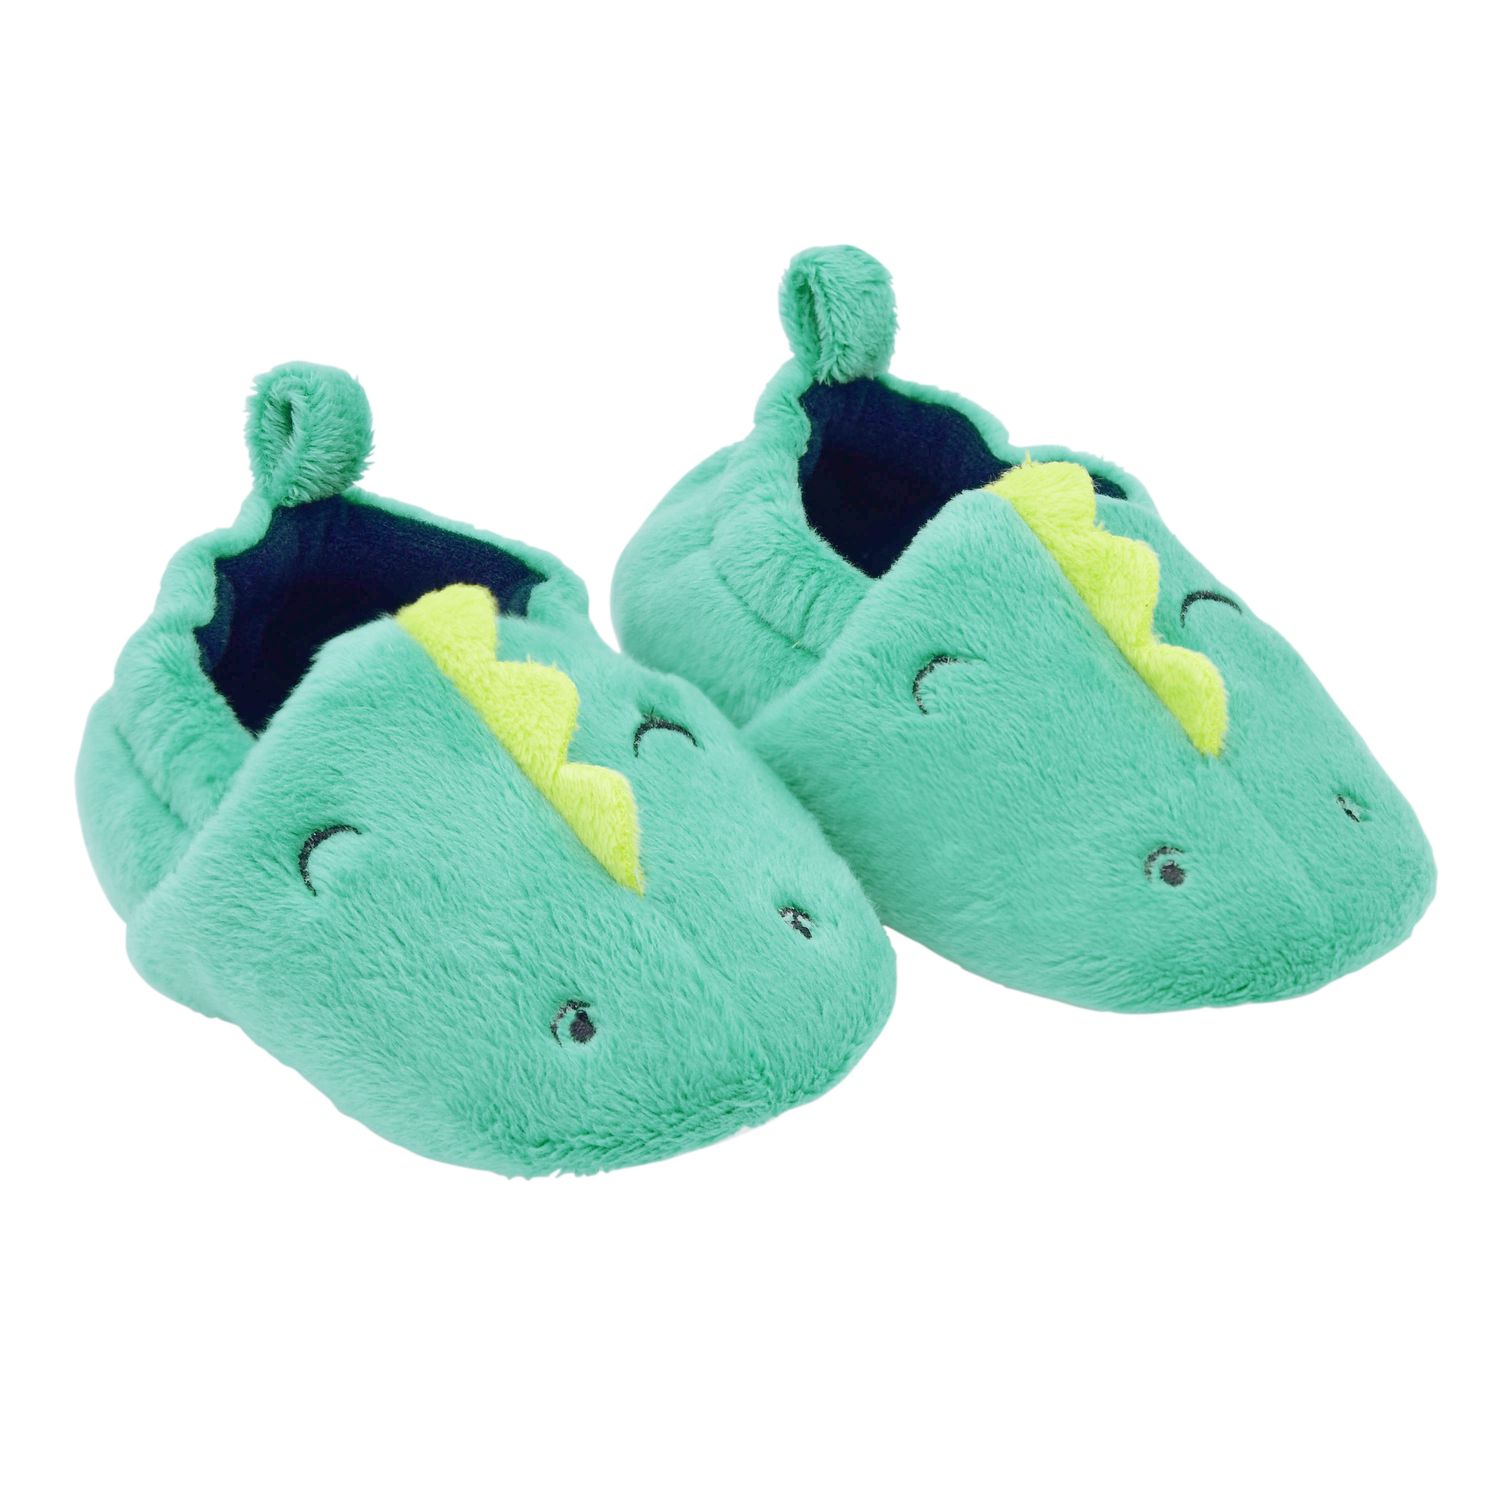 crocs comfort dual